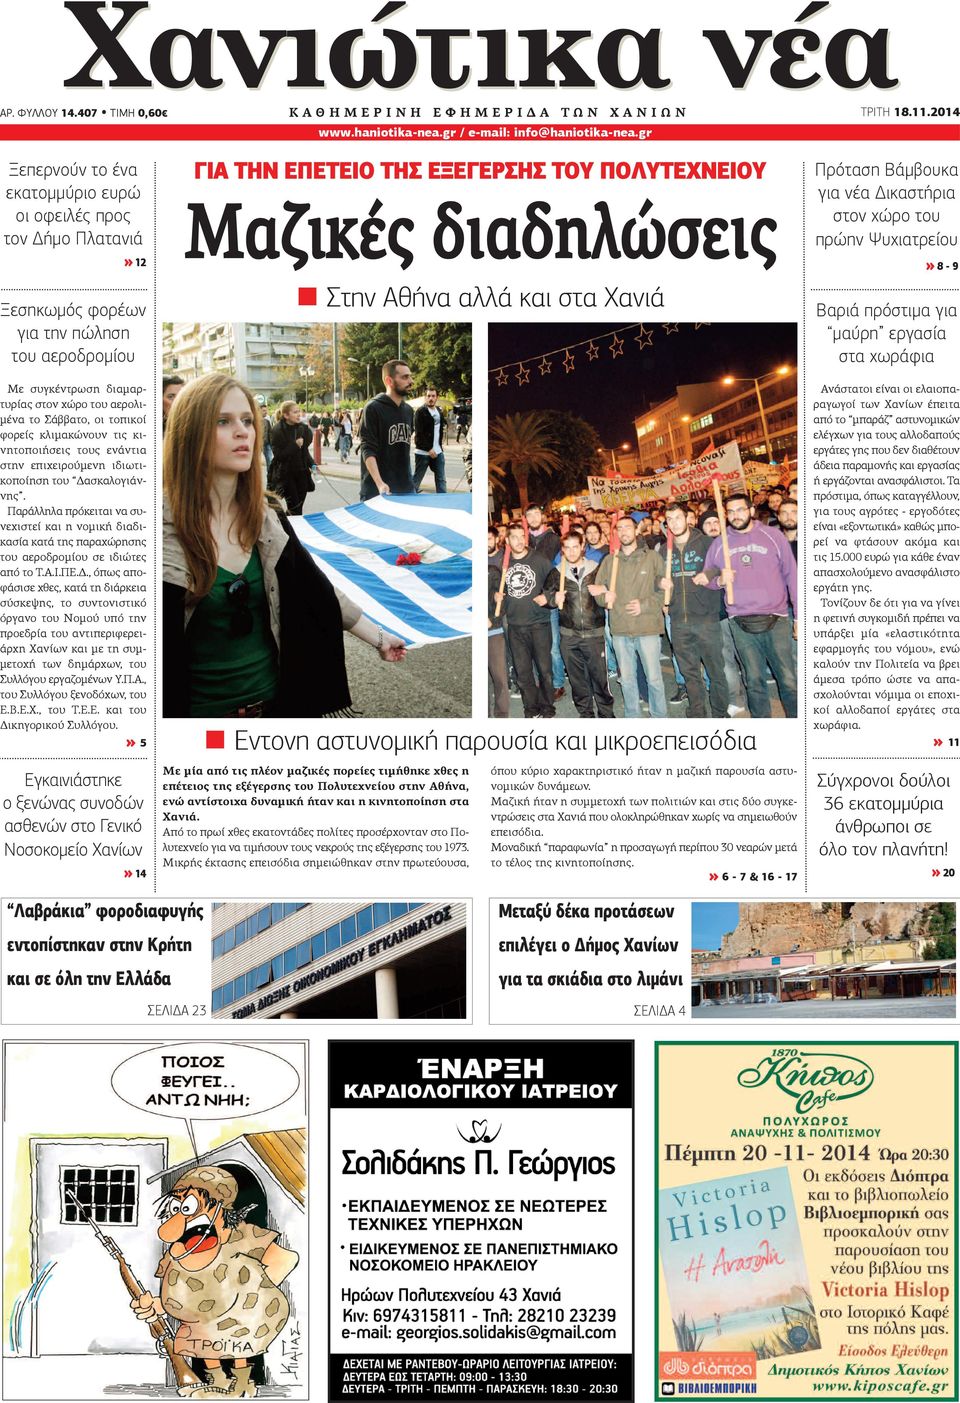 haniotika-nea.gr / e-mail: info@haniotika-nea.gr ΓΙΑ ΤΗΝ ΕΠΕΤΕΙΟ ΤΗΣ ΕΞΕΓΕΡΣΗΣ ΤΟΥ ΠΟΛΥΤΕΧΝΕΙΟΥ Μαζικές διαδηλώσεις Στην Αθήνα αλλά και στα Χανιά ΤΡΙΤΗ 18.11.